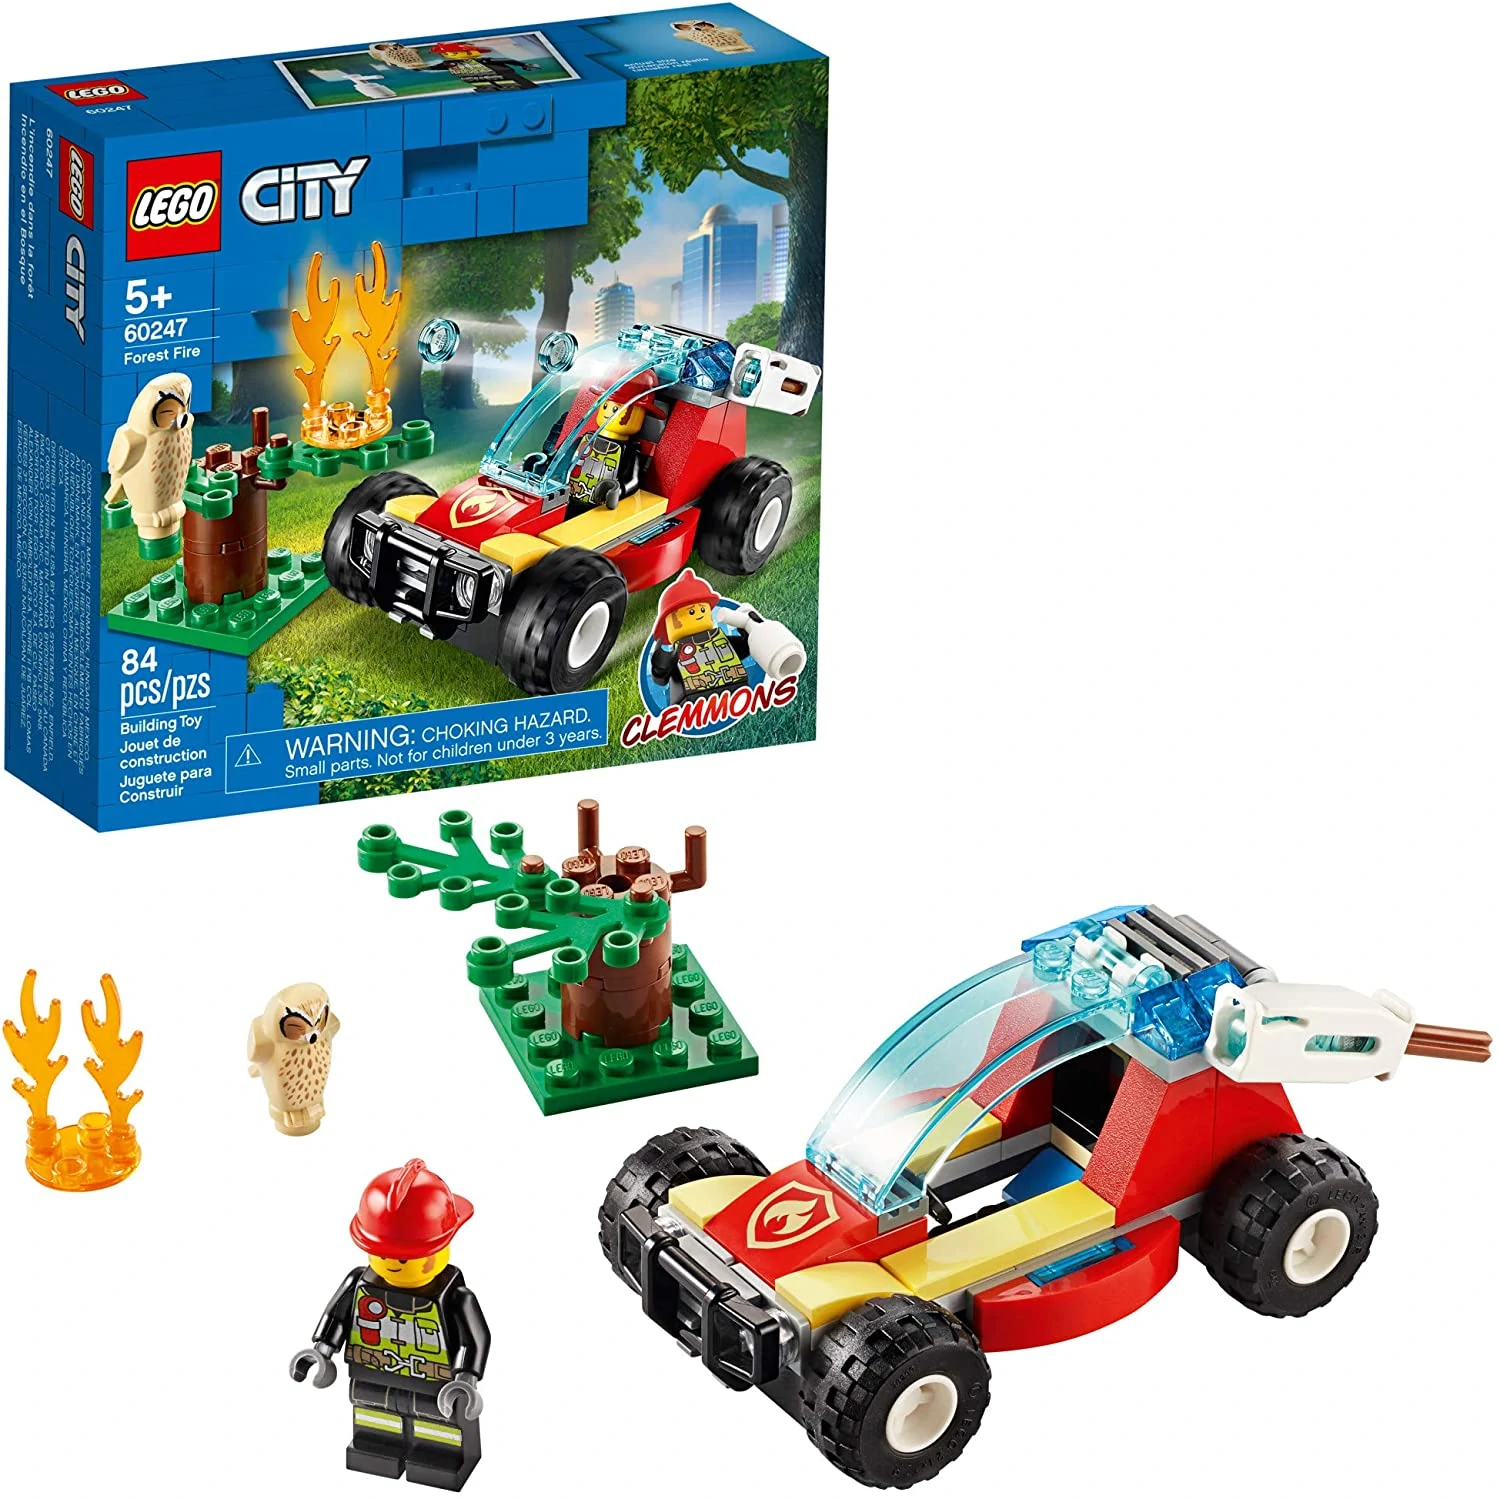 Lego City Fire Fighter set